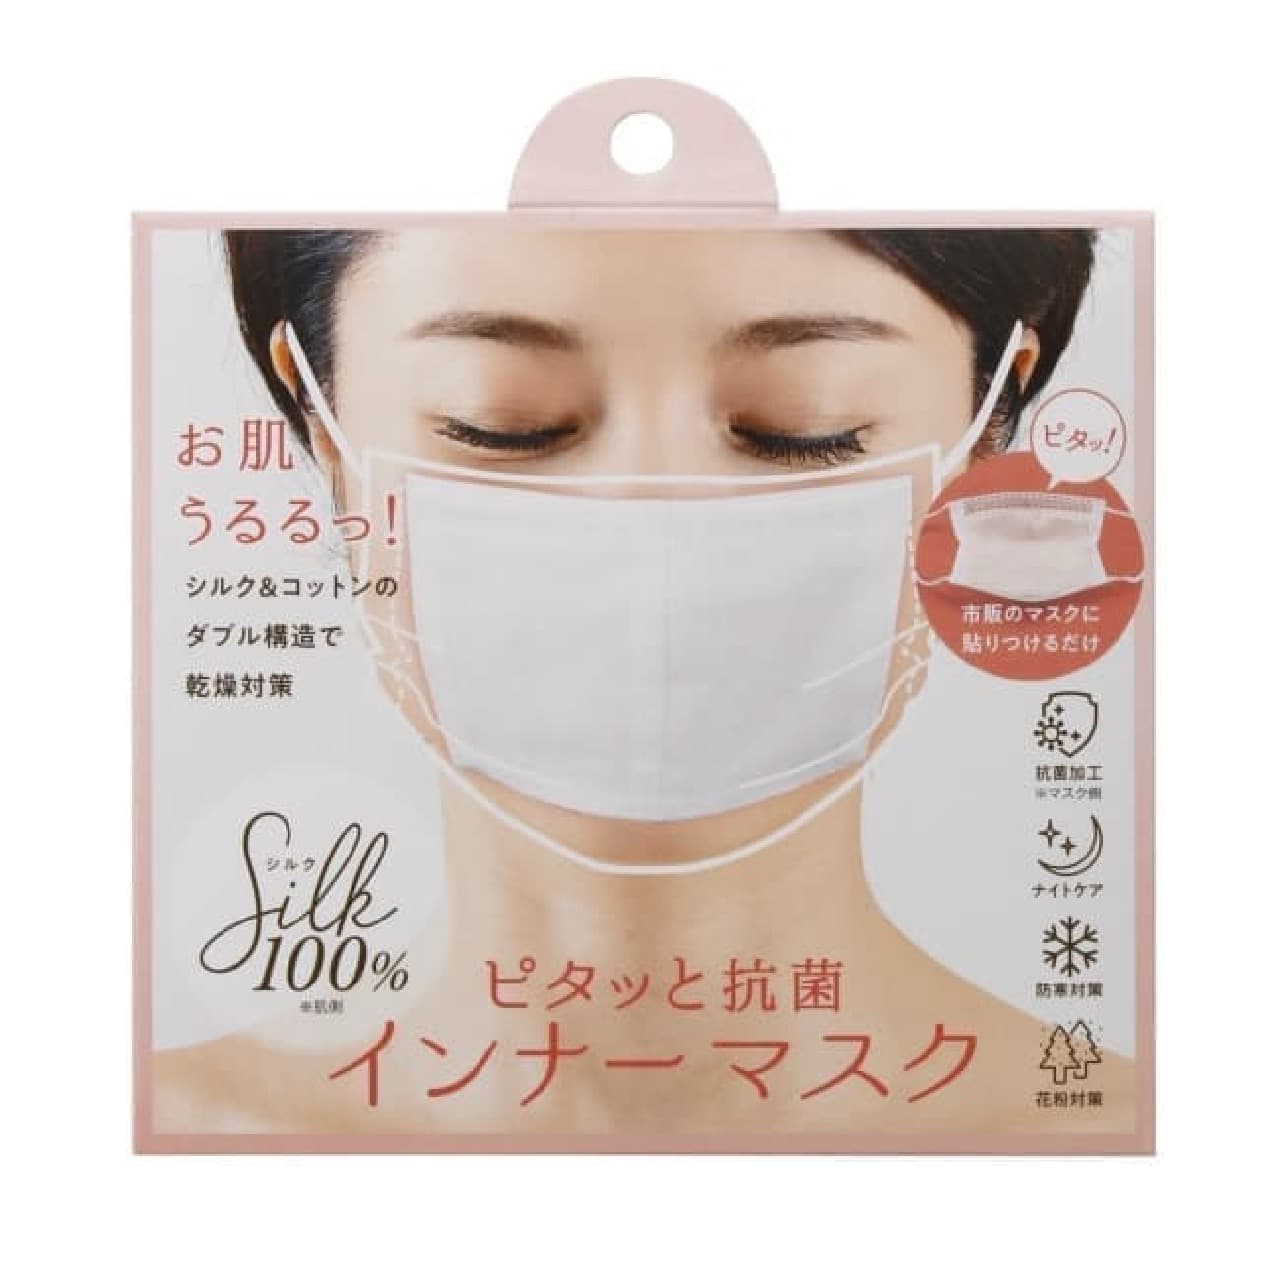 Antibacterial inner mask with 100% silk